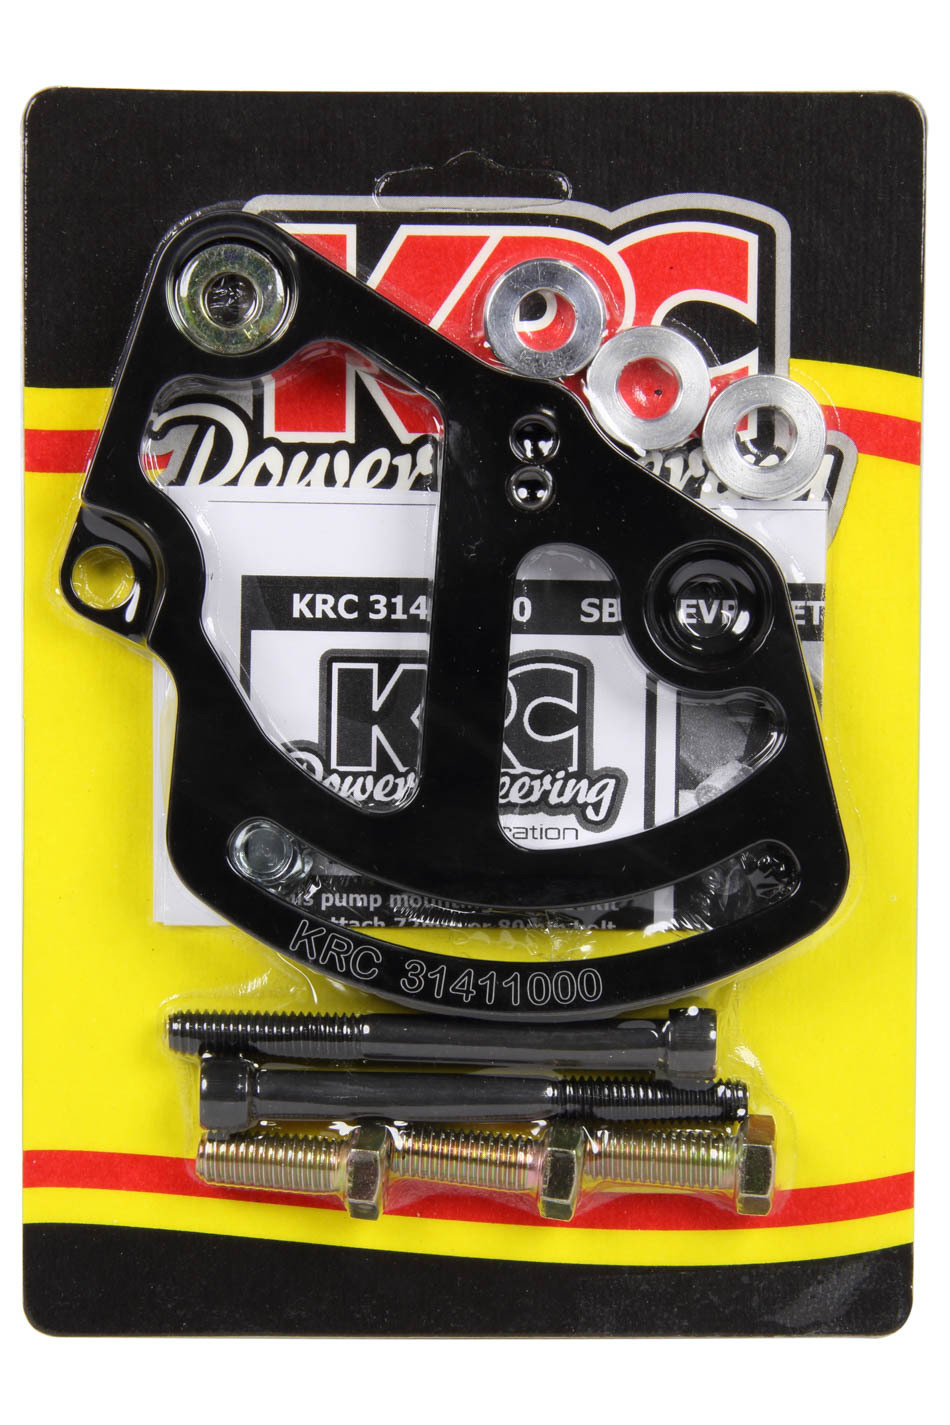 KRC Power Steering 31410000 - Pump Mounting Bracket Kit Head Mount SBC